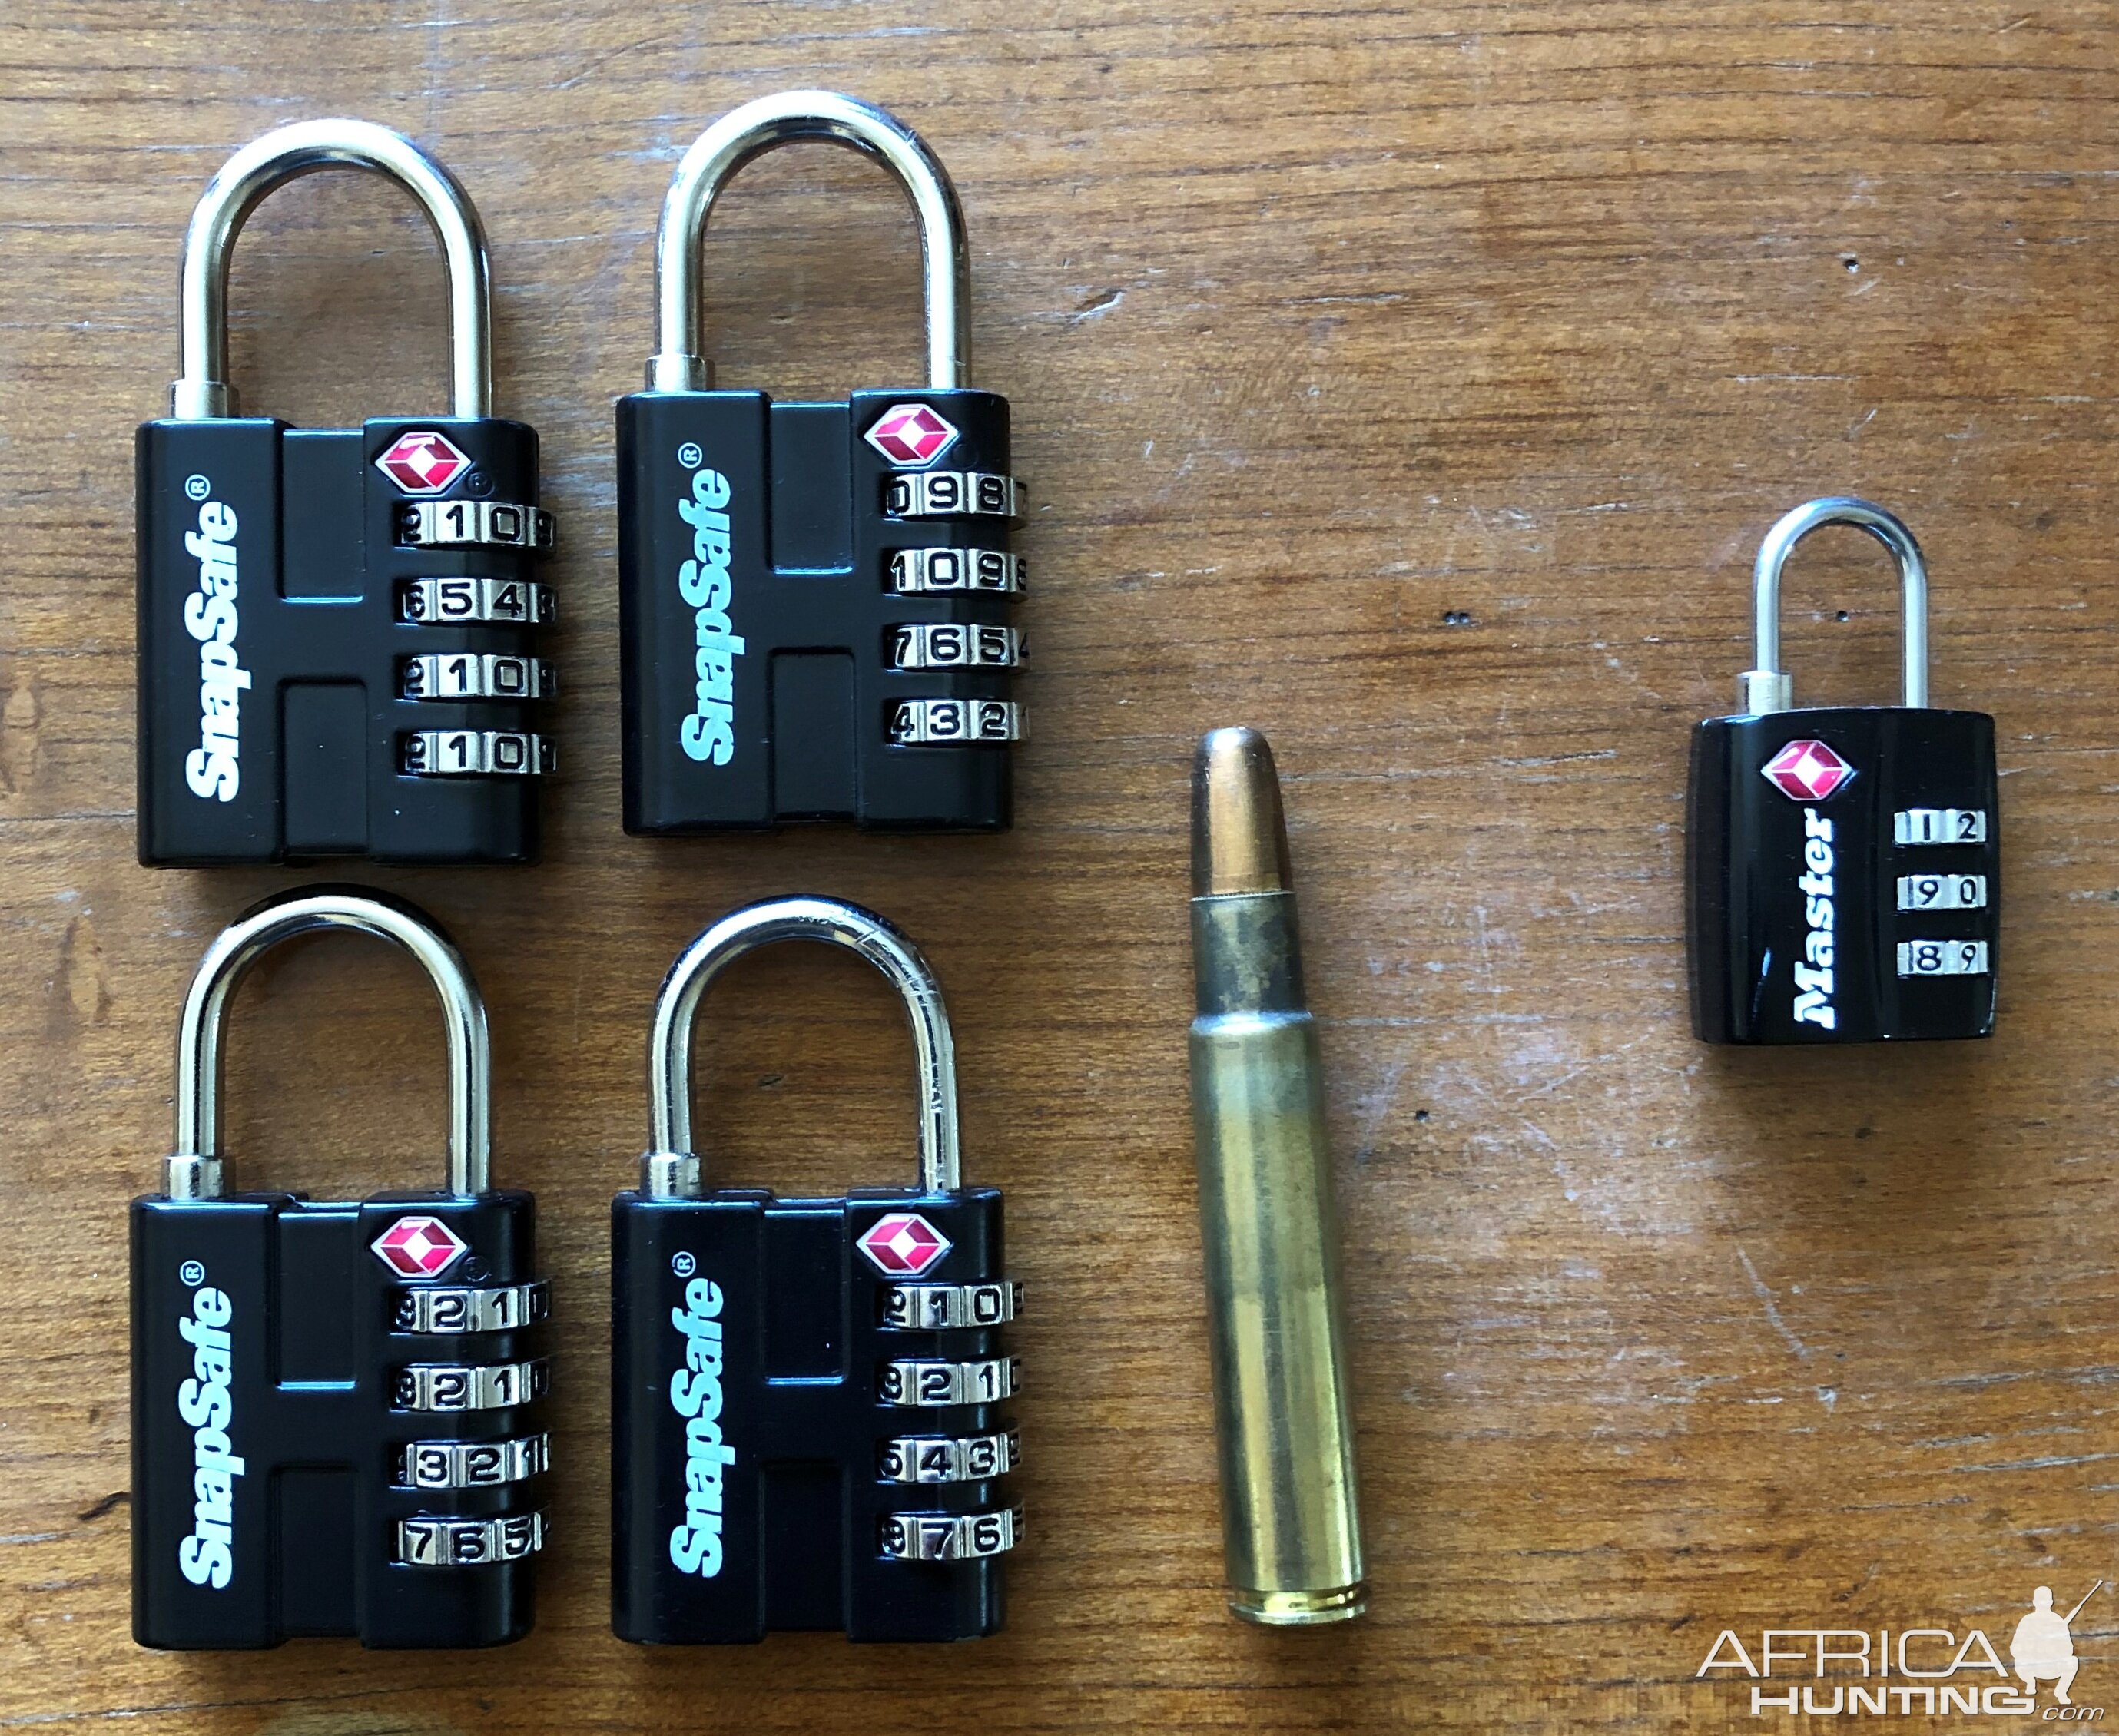 Large size TSA locks & .416 Rigby cartridge for scale